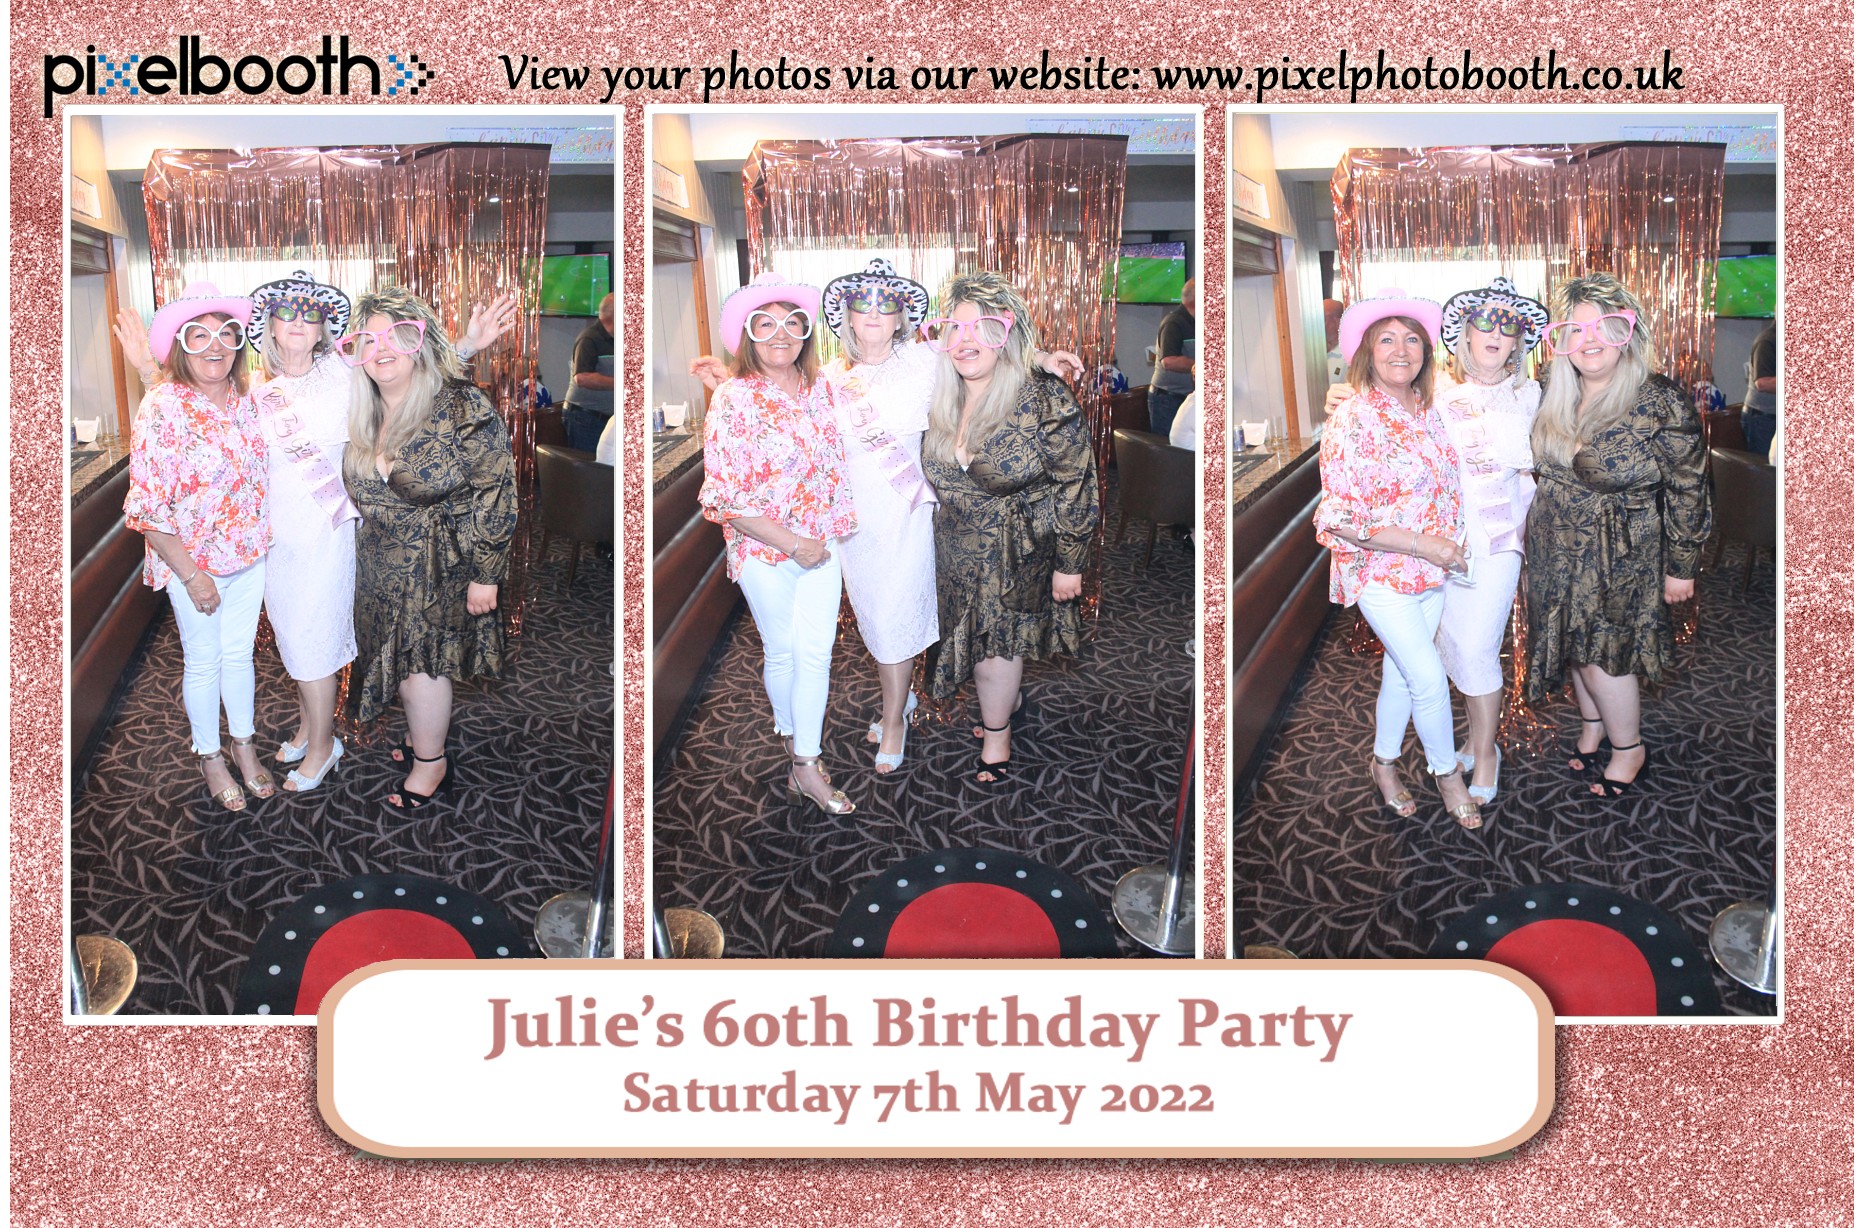 7th May 2022: Julie's 60th Birthday Party at Malpas Sports Club